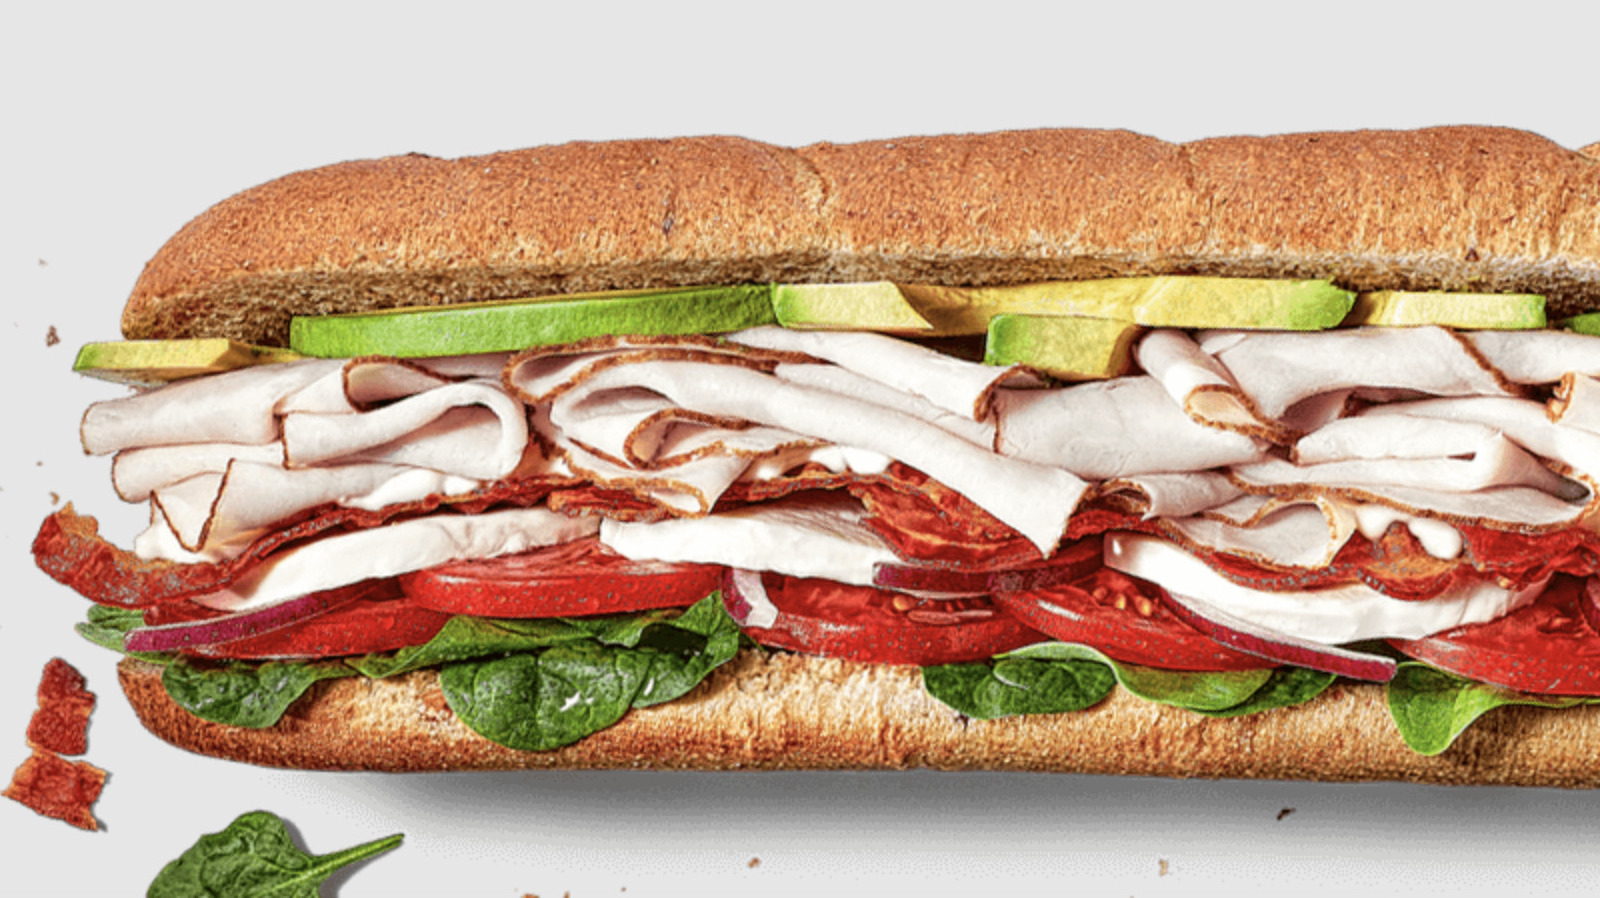 Subway adding 12 sandwiches to the menu